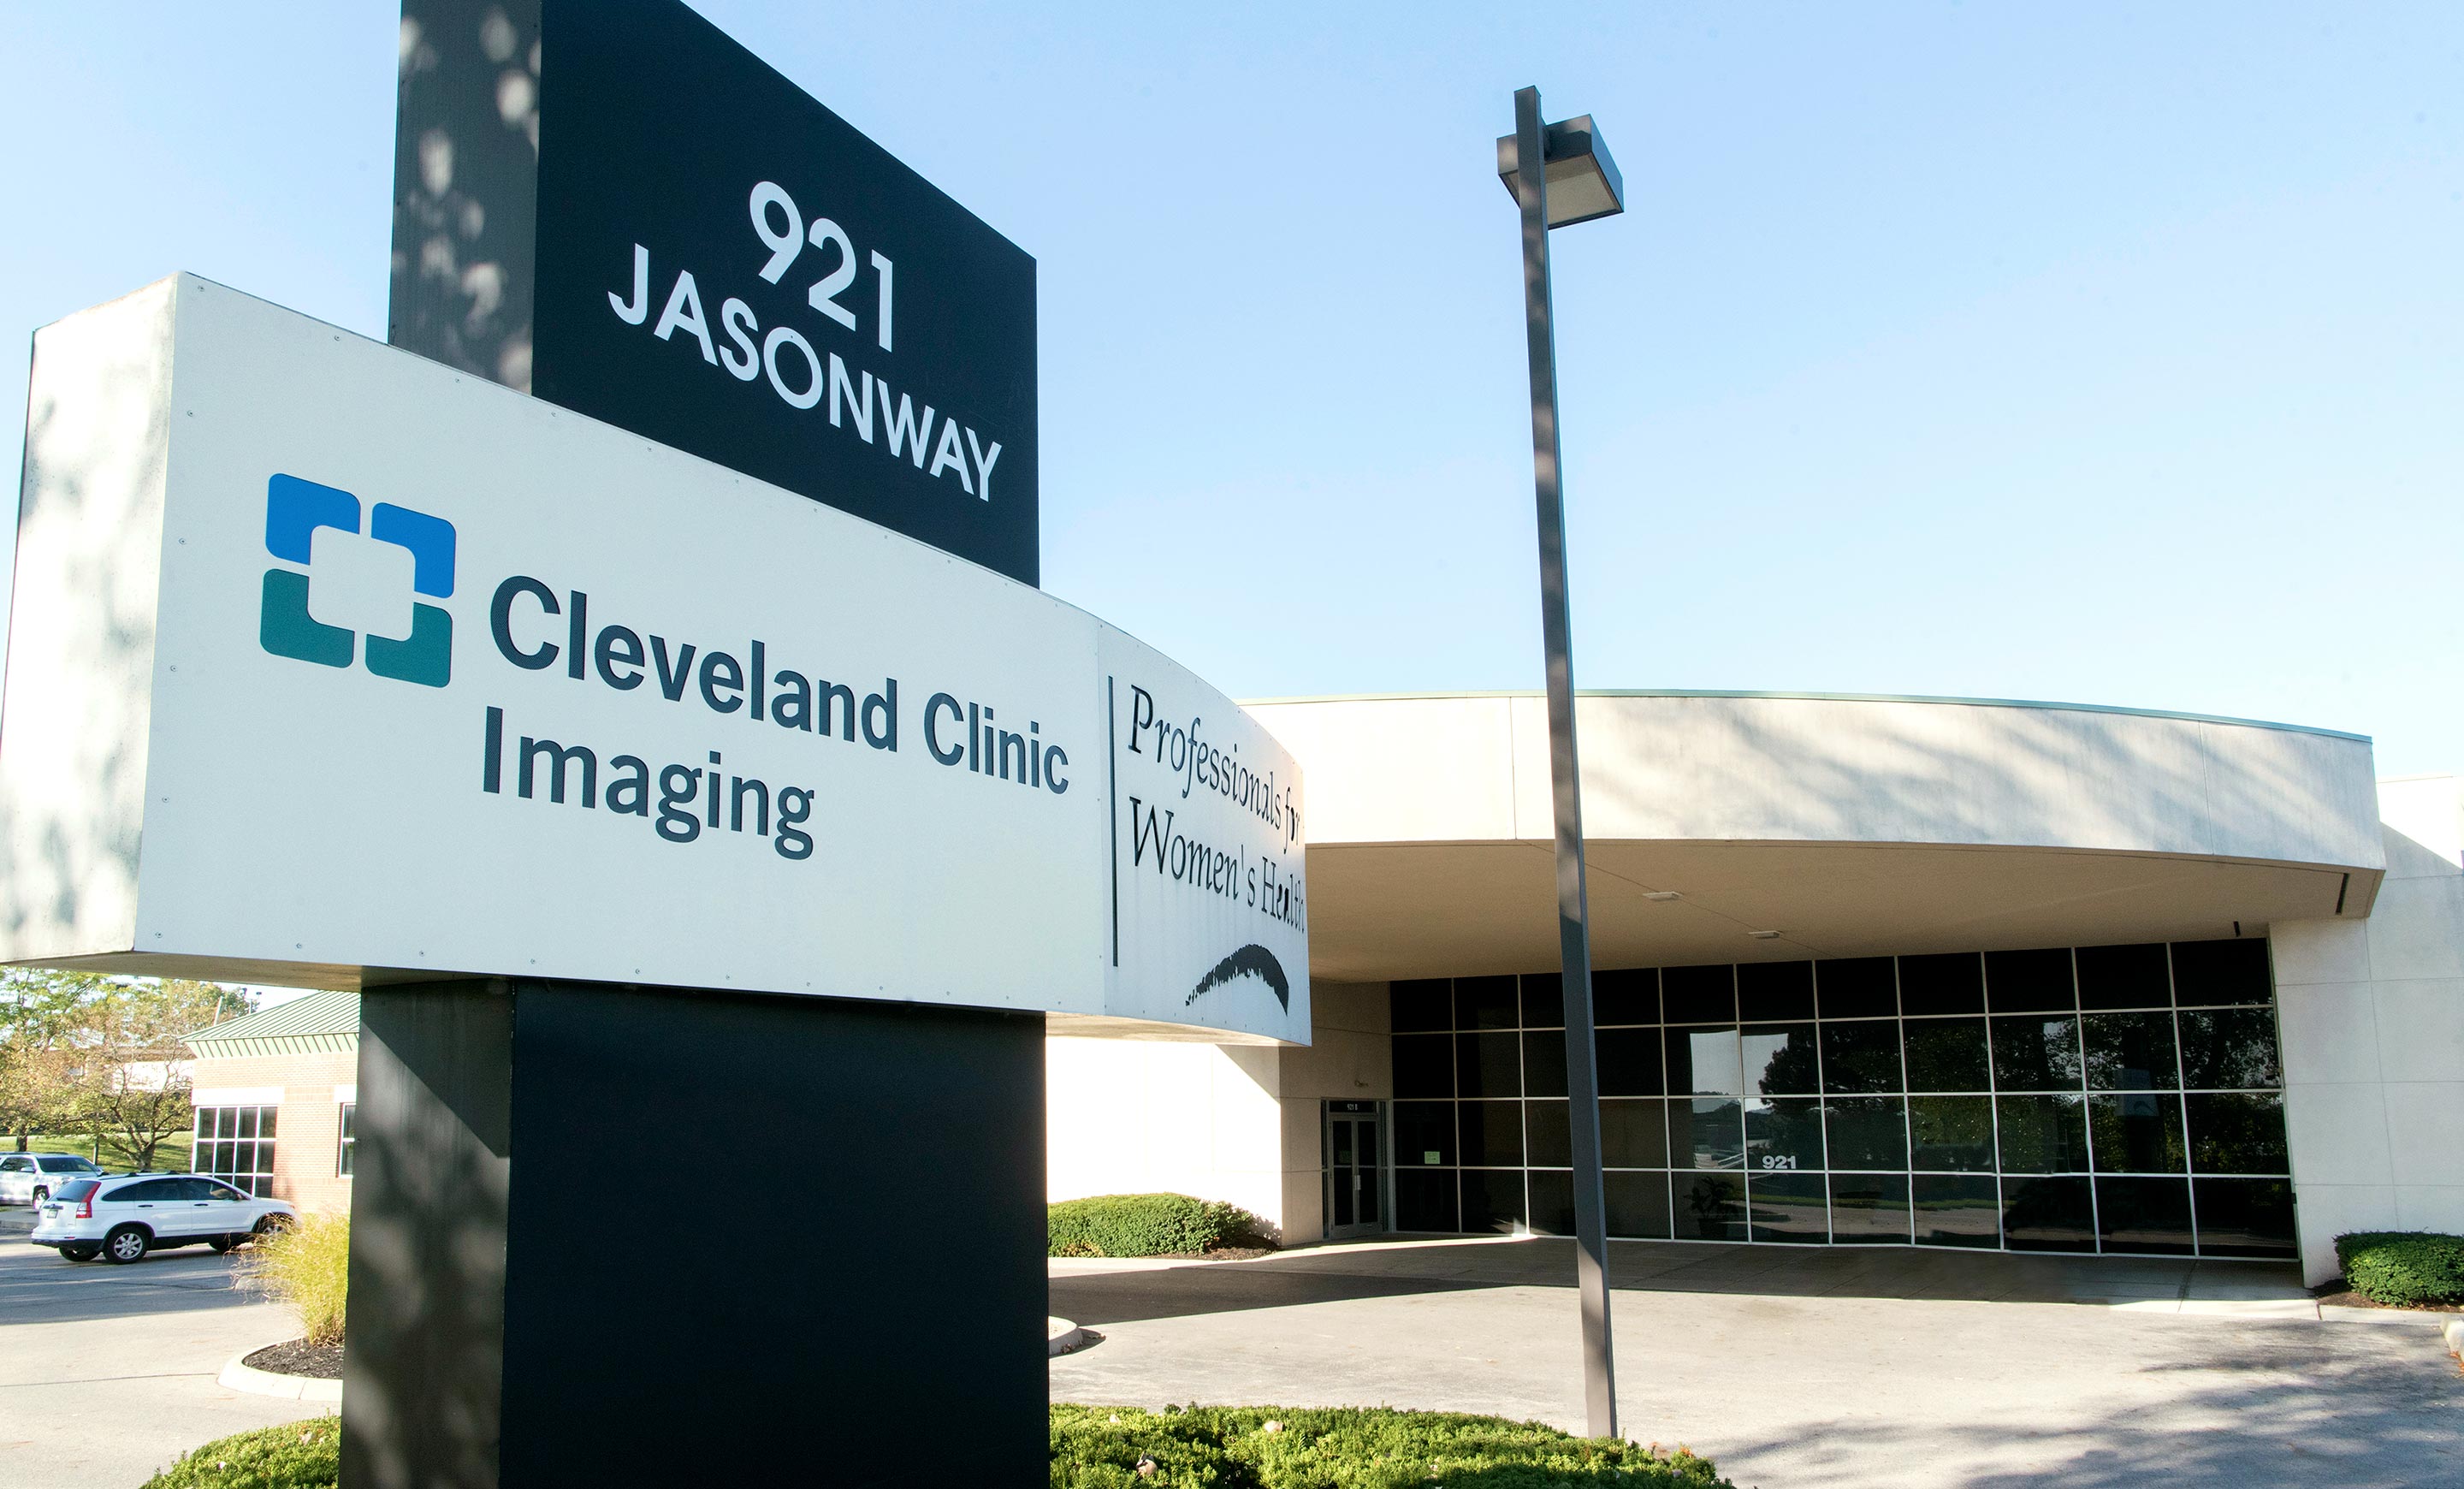 Columbus Star Imaging Jasonway Avenue|Cleveland Clinic